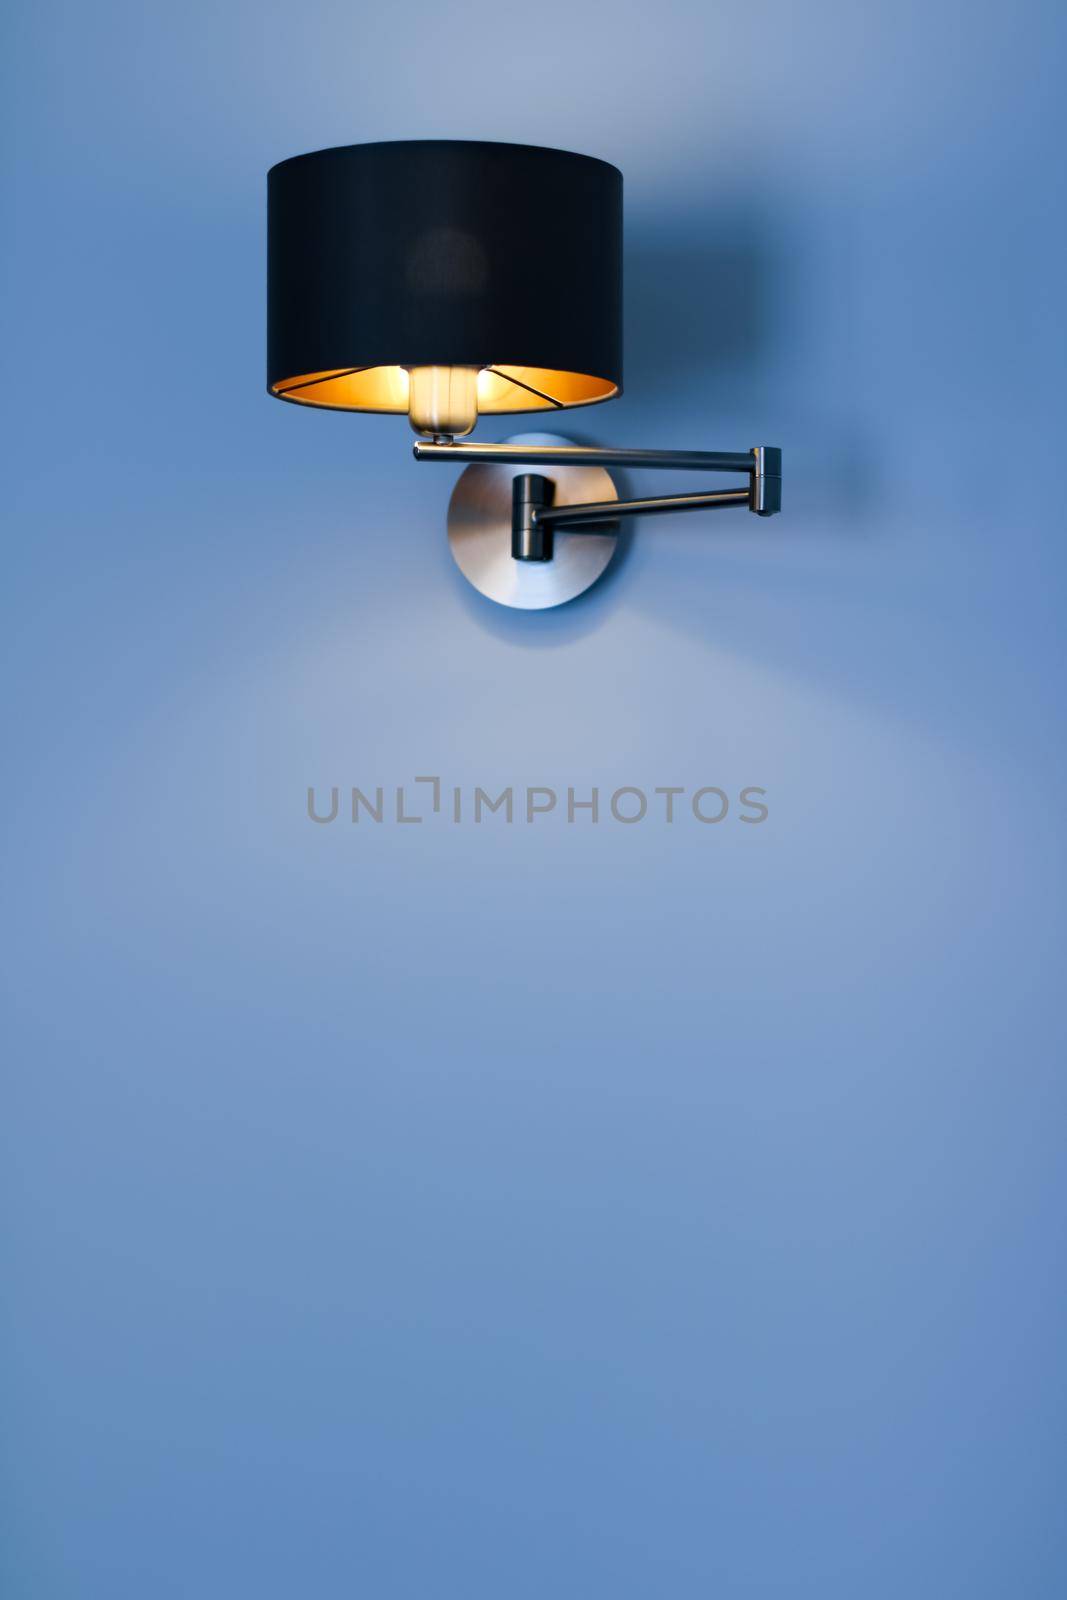 Golden lamp in a room, elegant modern home decor lighting by Anneleven